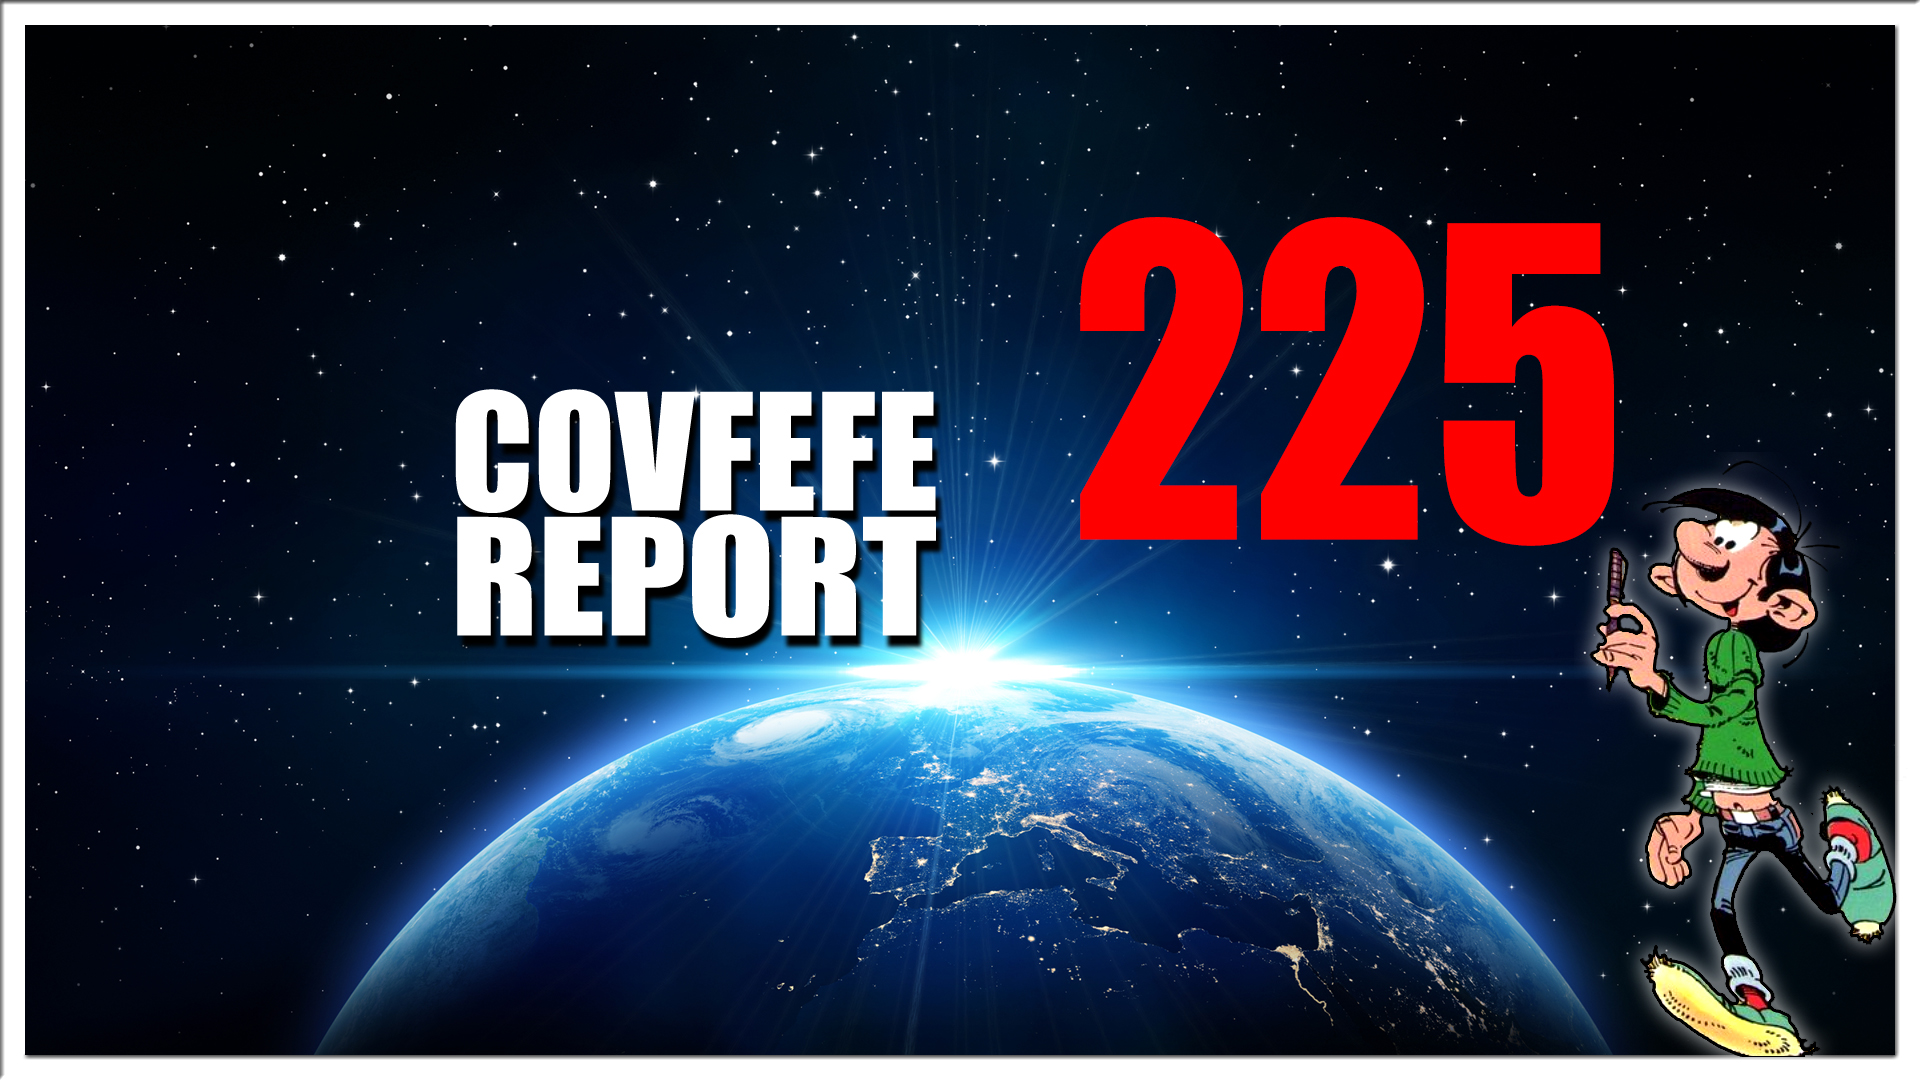 Covfefe Report 225. ngt